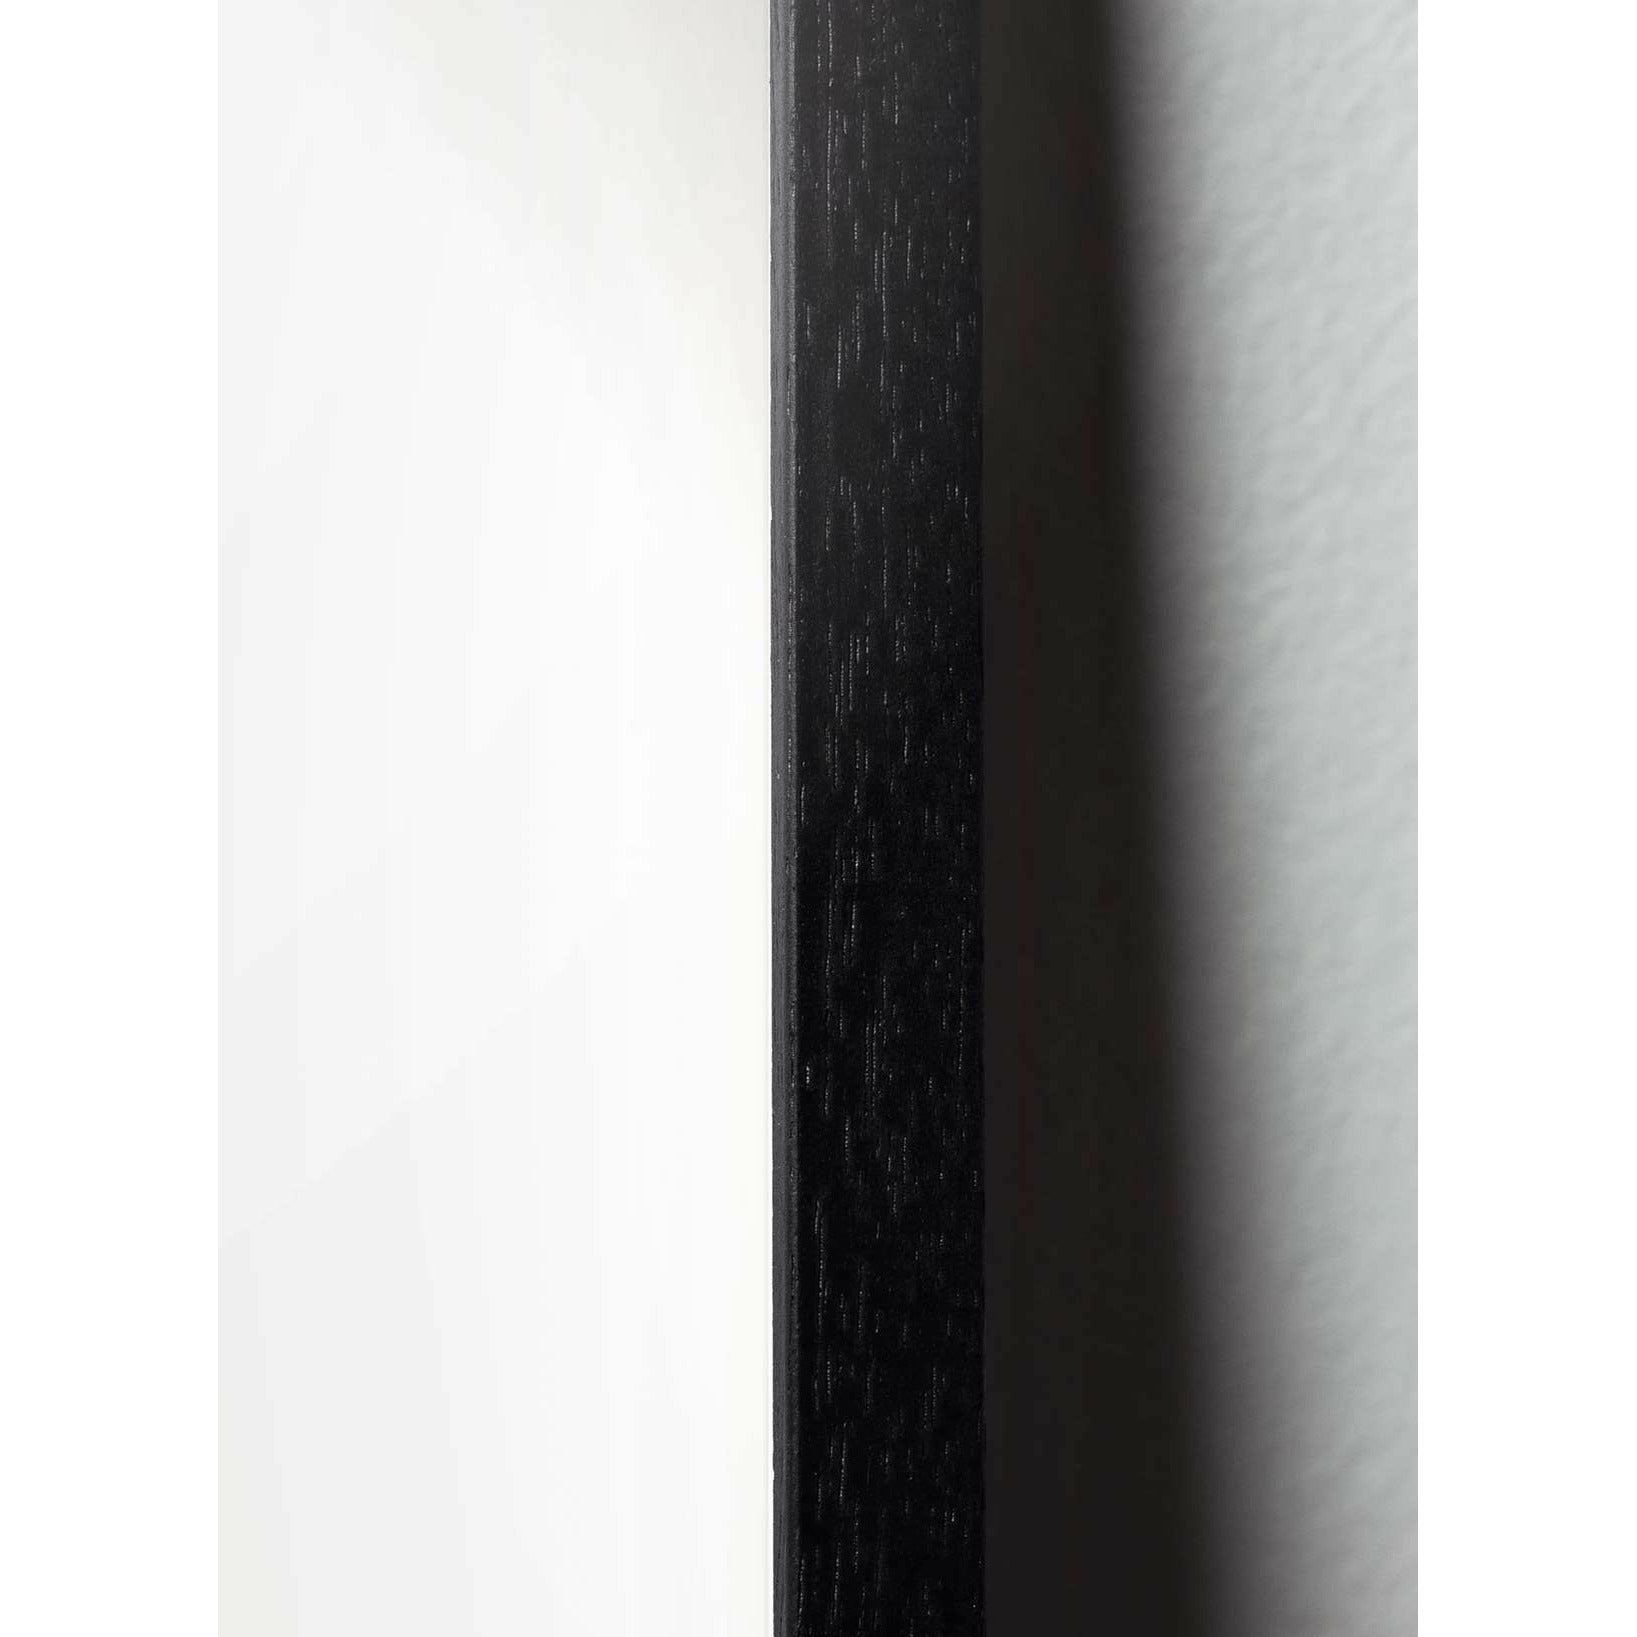 Brainchild Flowerpot Classic Poster, Frame In Black Lacquered Wood 70x100 Cm, Black Background